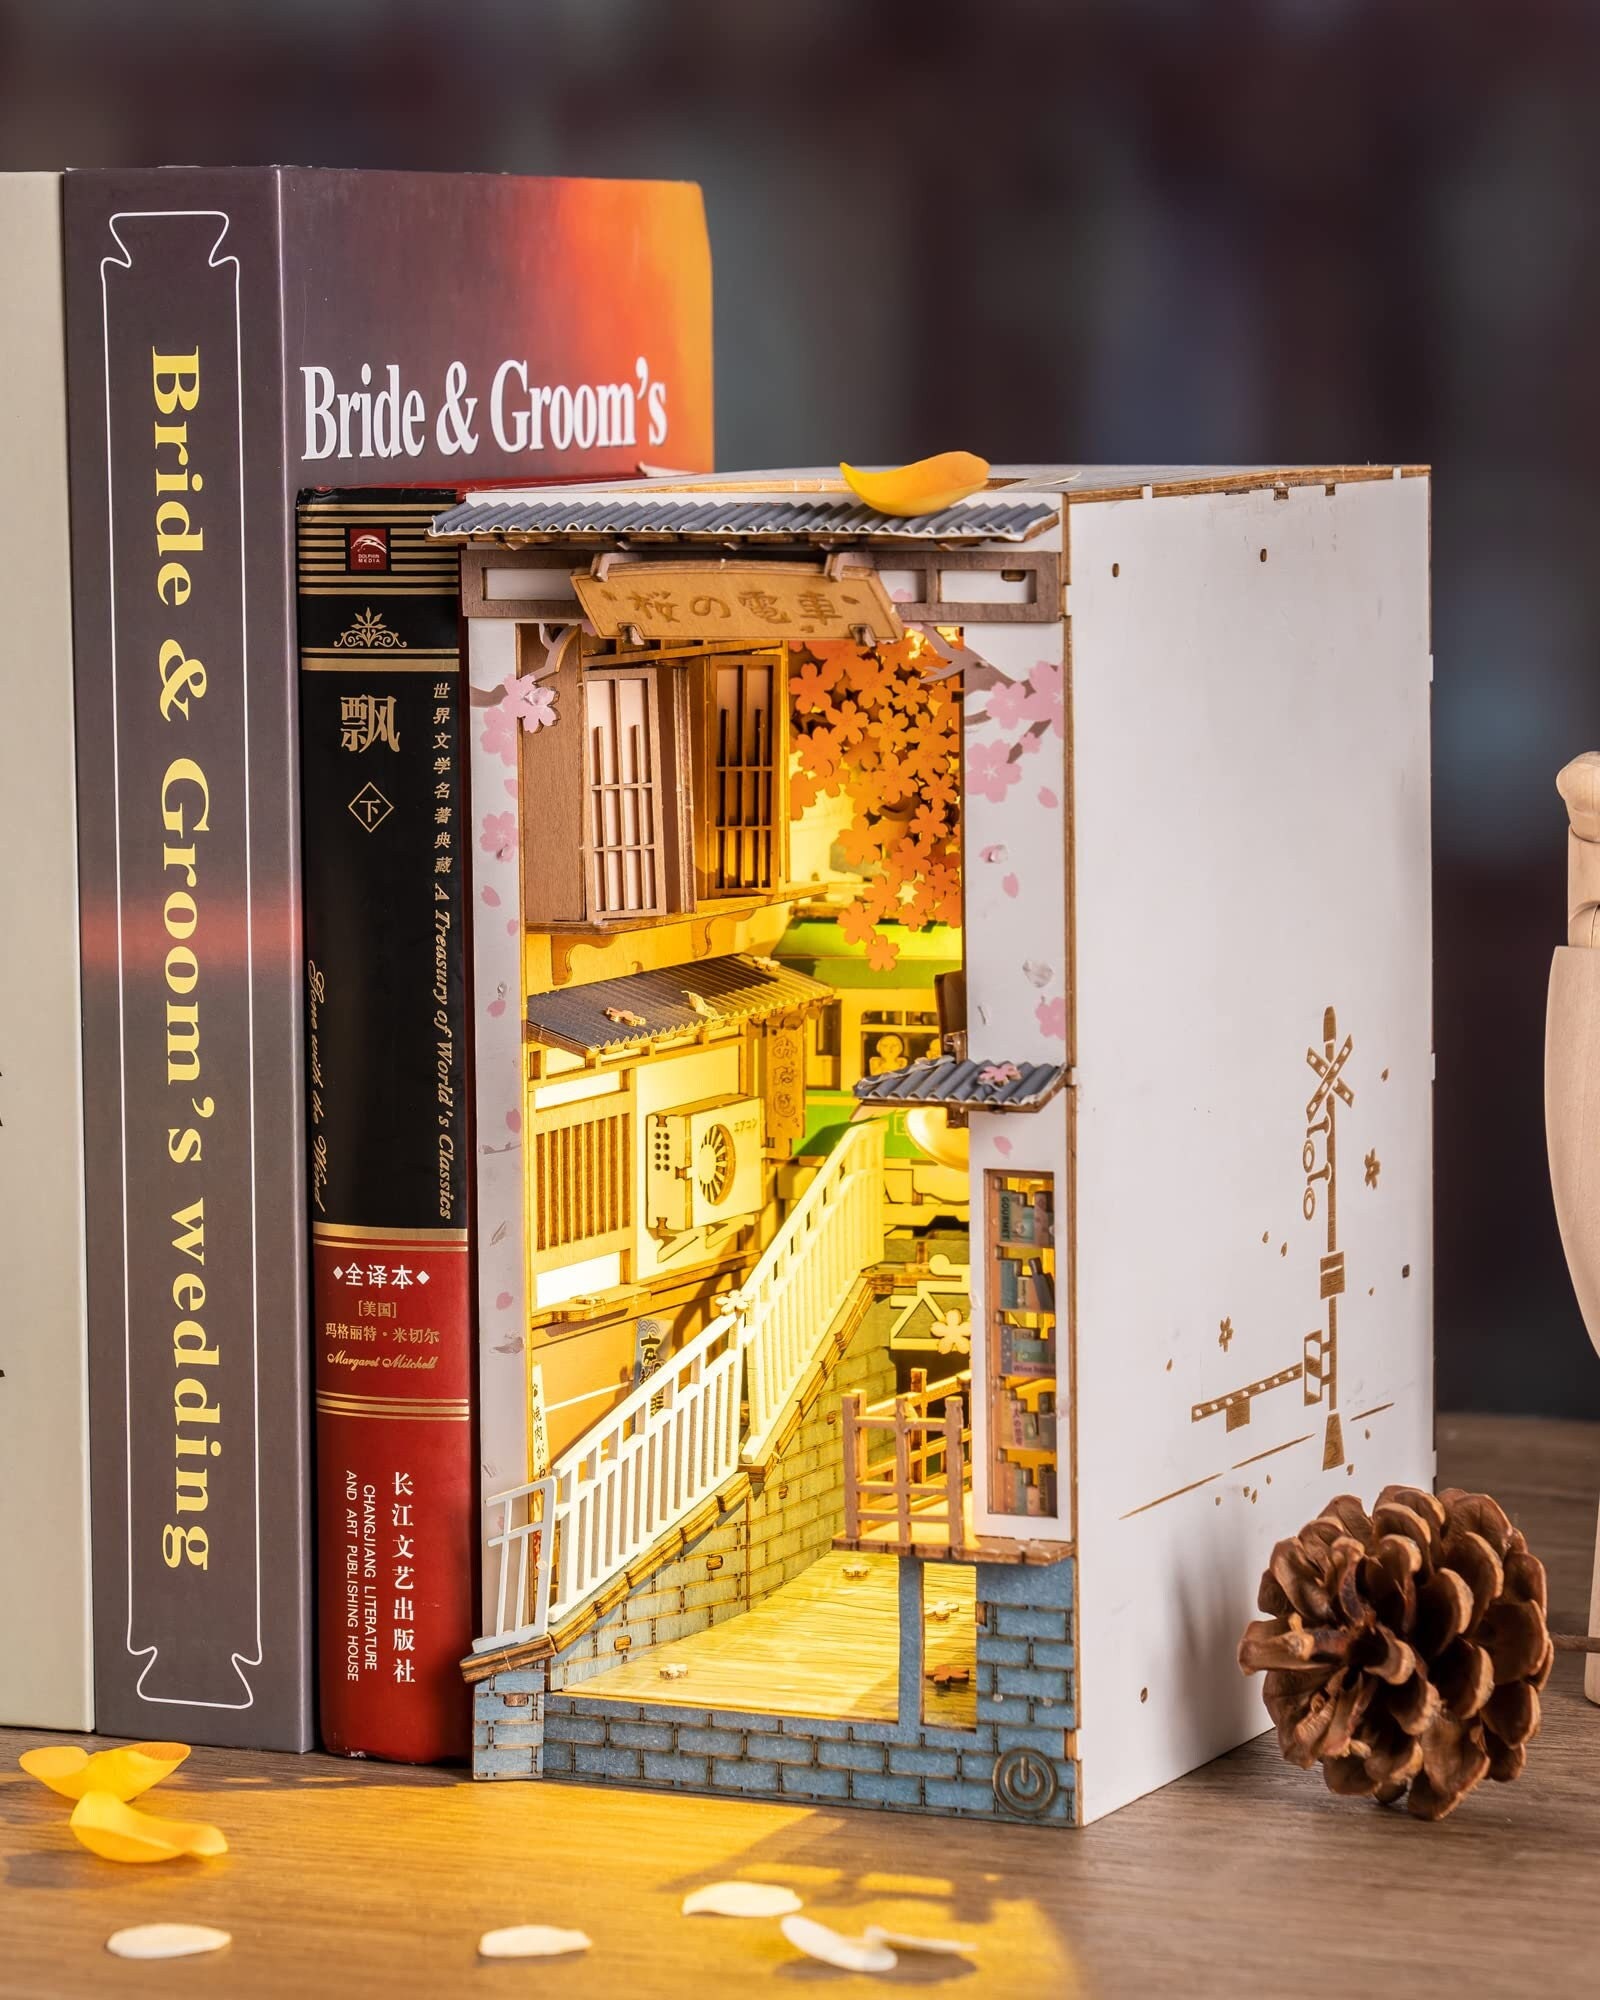  𝐋𝐄𝐃 Book Nook 𝐊𝐢𝐭-Decorative 𝐌𝐚𝐠𝐢𝐜 𝐃𝐫𝐚𝐠𝐨𝐧  Booknook Stand-𝟑𝐃 Wooden DIY Puzzle 𝐆𝐢𝐟𝐭 for Adults-Bookshelf Insert  Booknook-Room Decor for Teen Girls Boys Women Men : Home & Kitchen